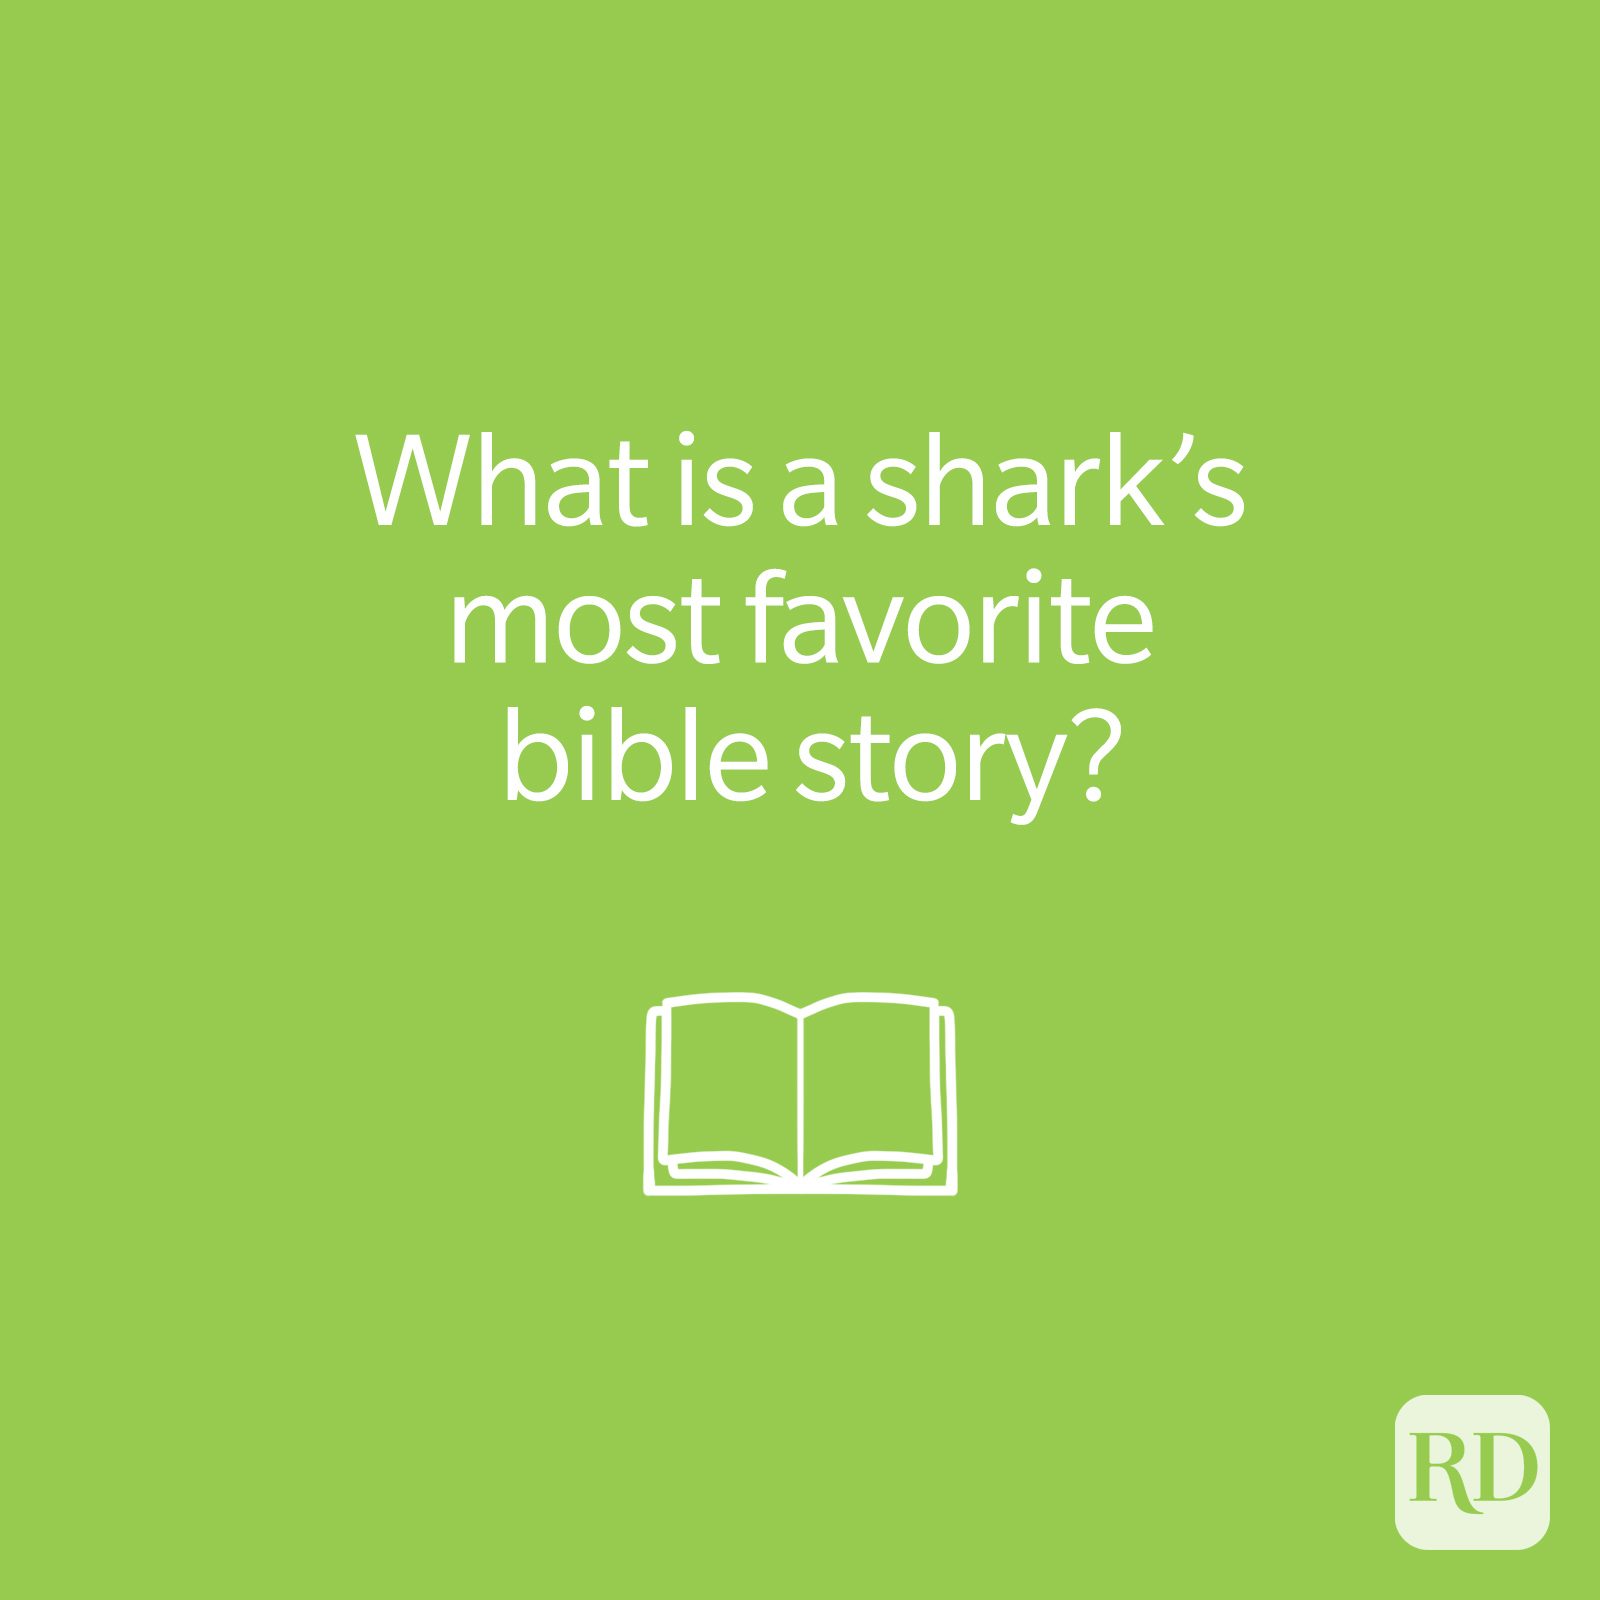 Shark riddle